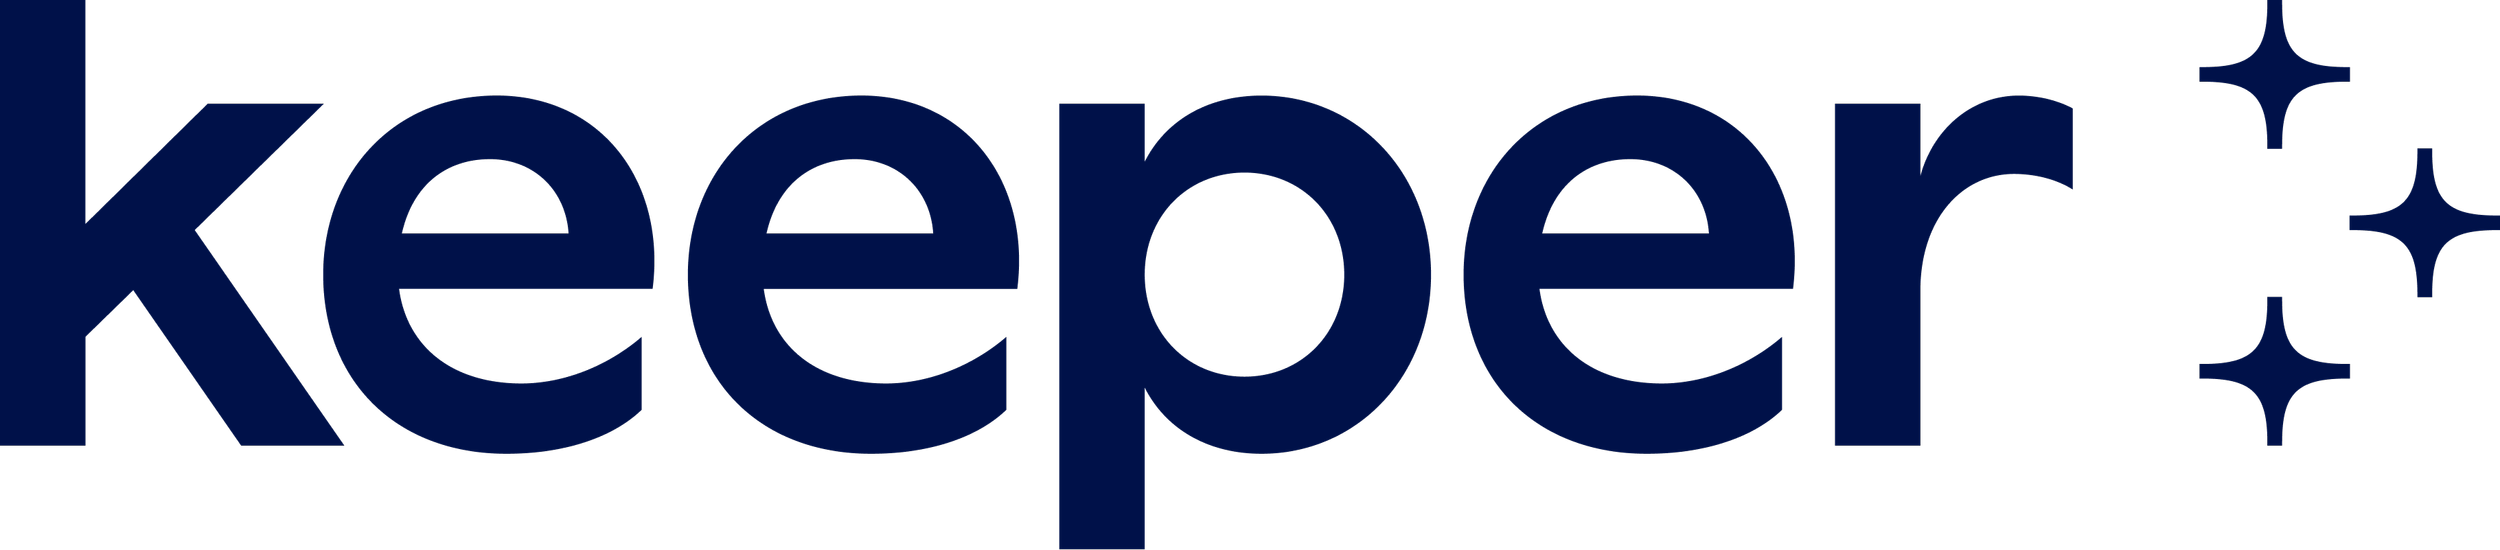 keeper logo.png